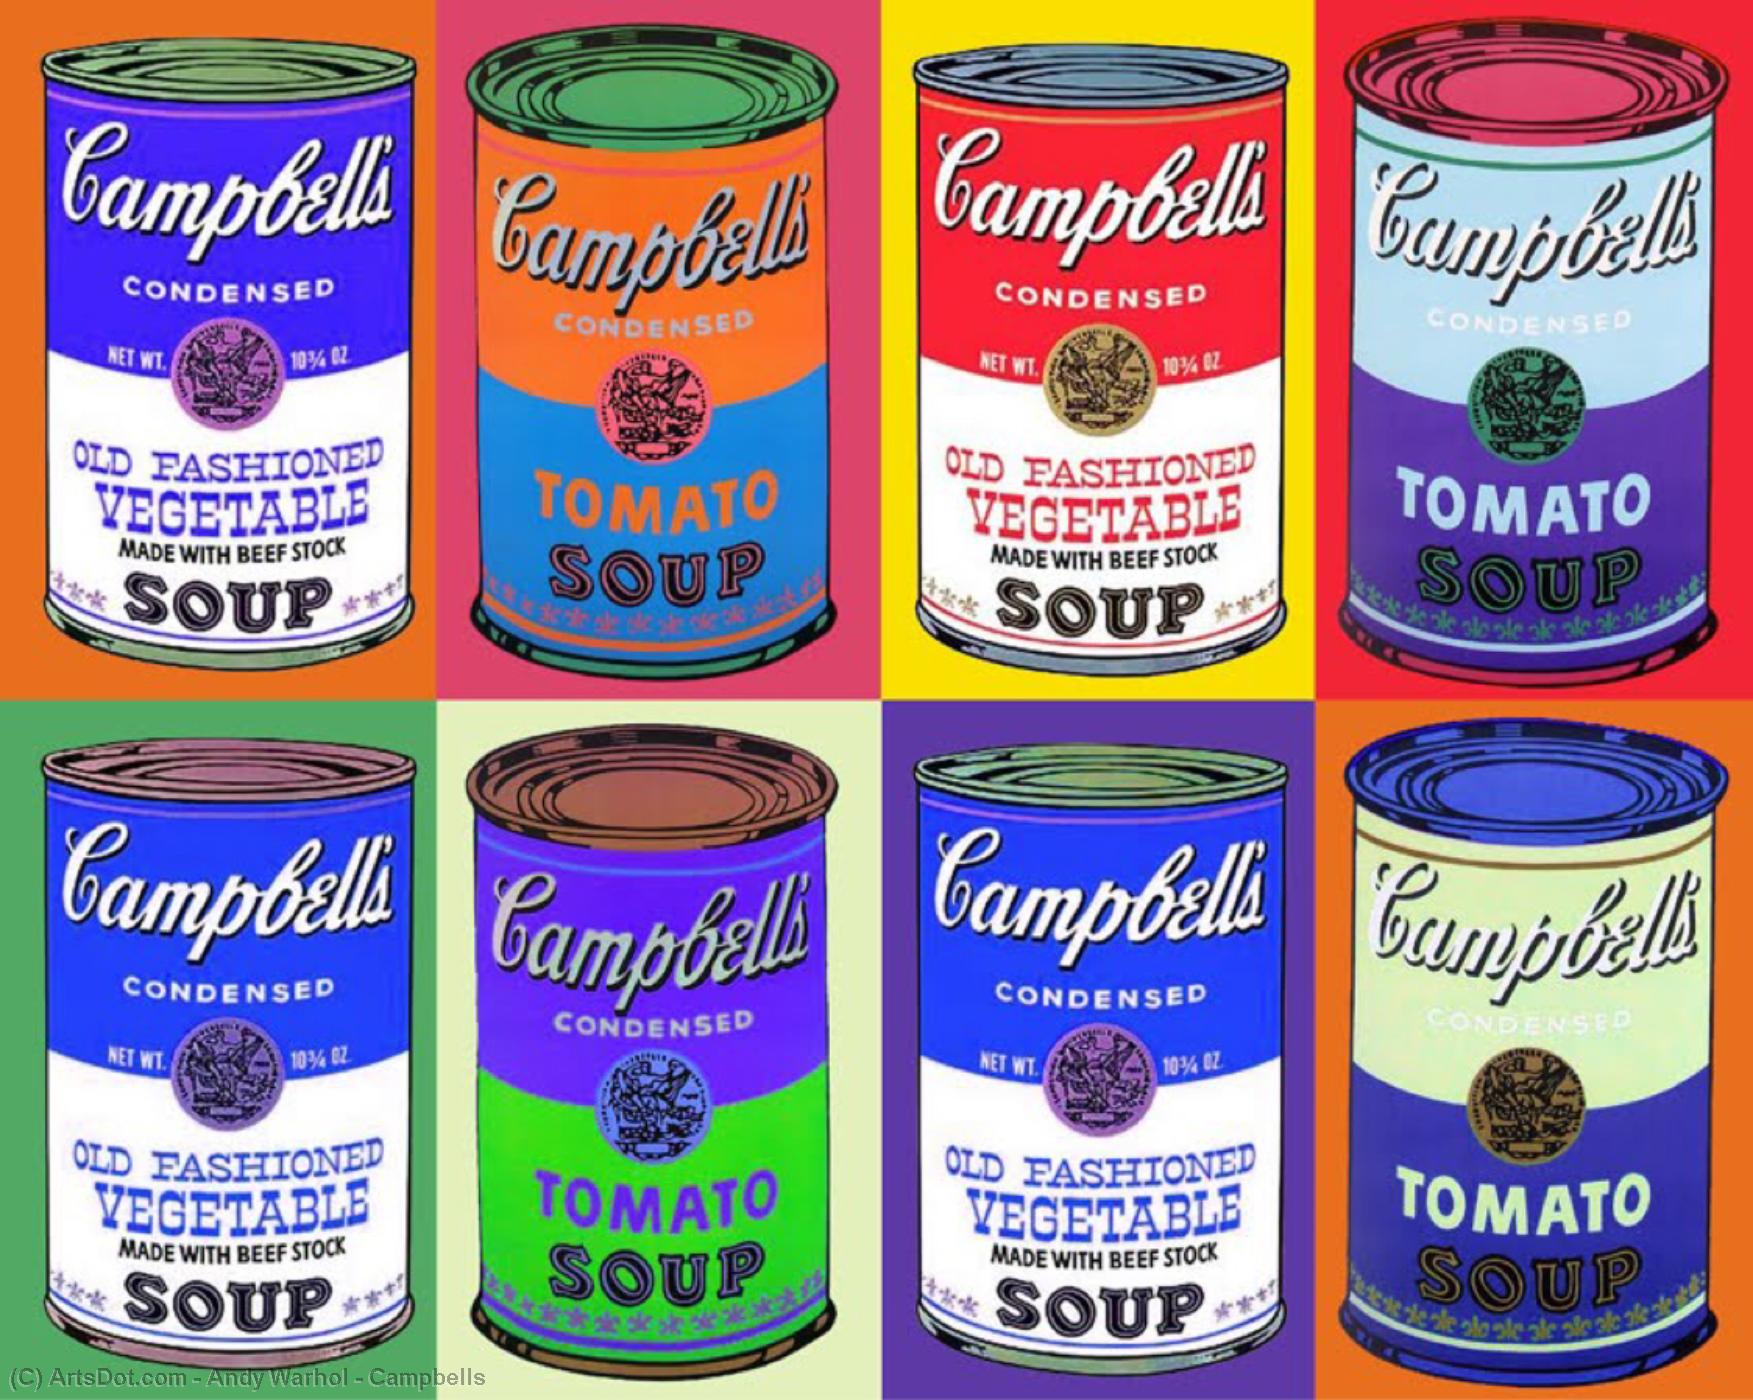 Andy Warhol- Campbells